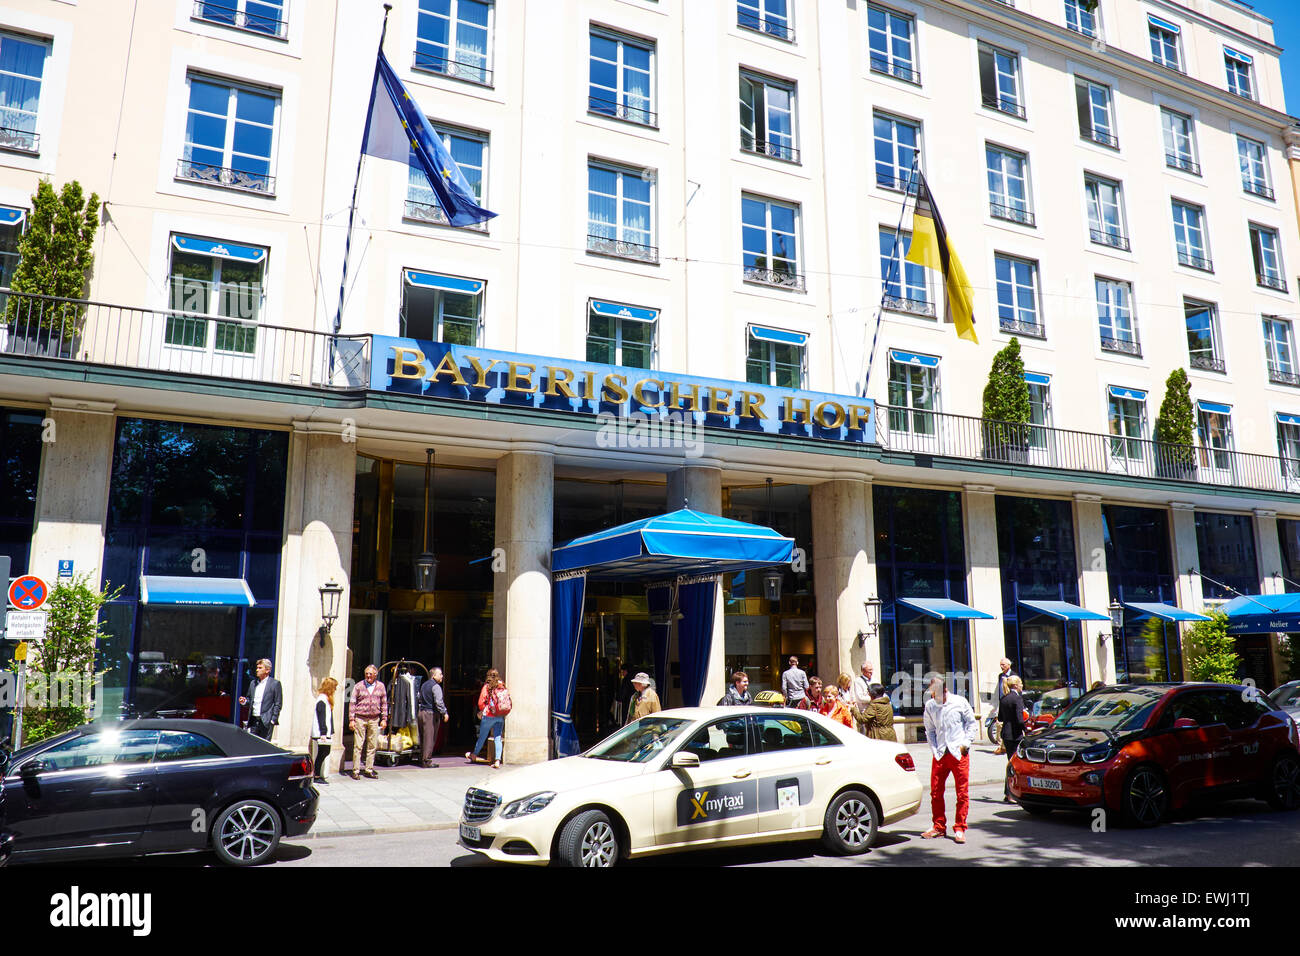 Bayerischer Hof Luxury Hotel Promenadepl Munich Bavaria Germany Stock Photo